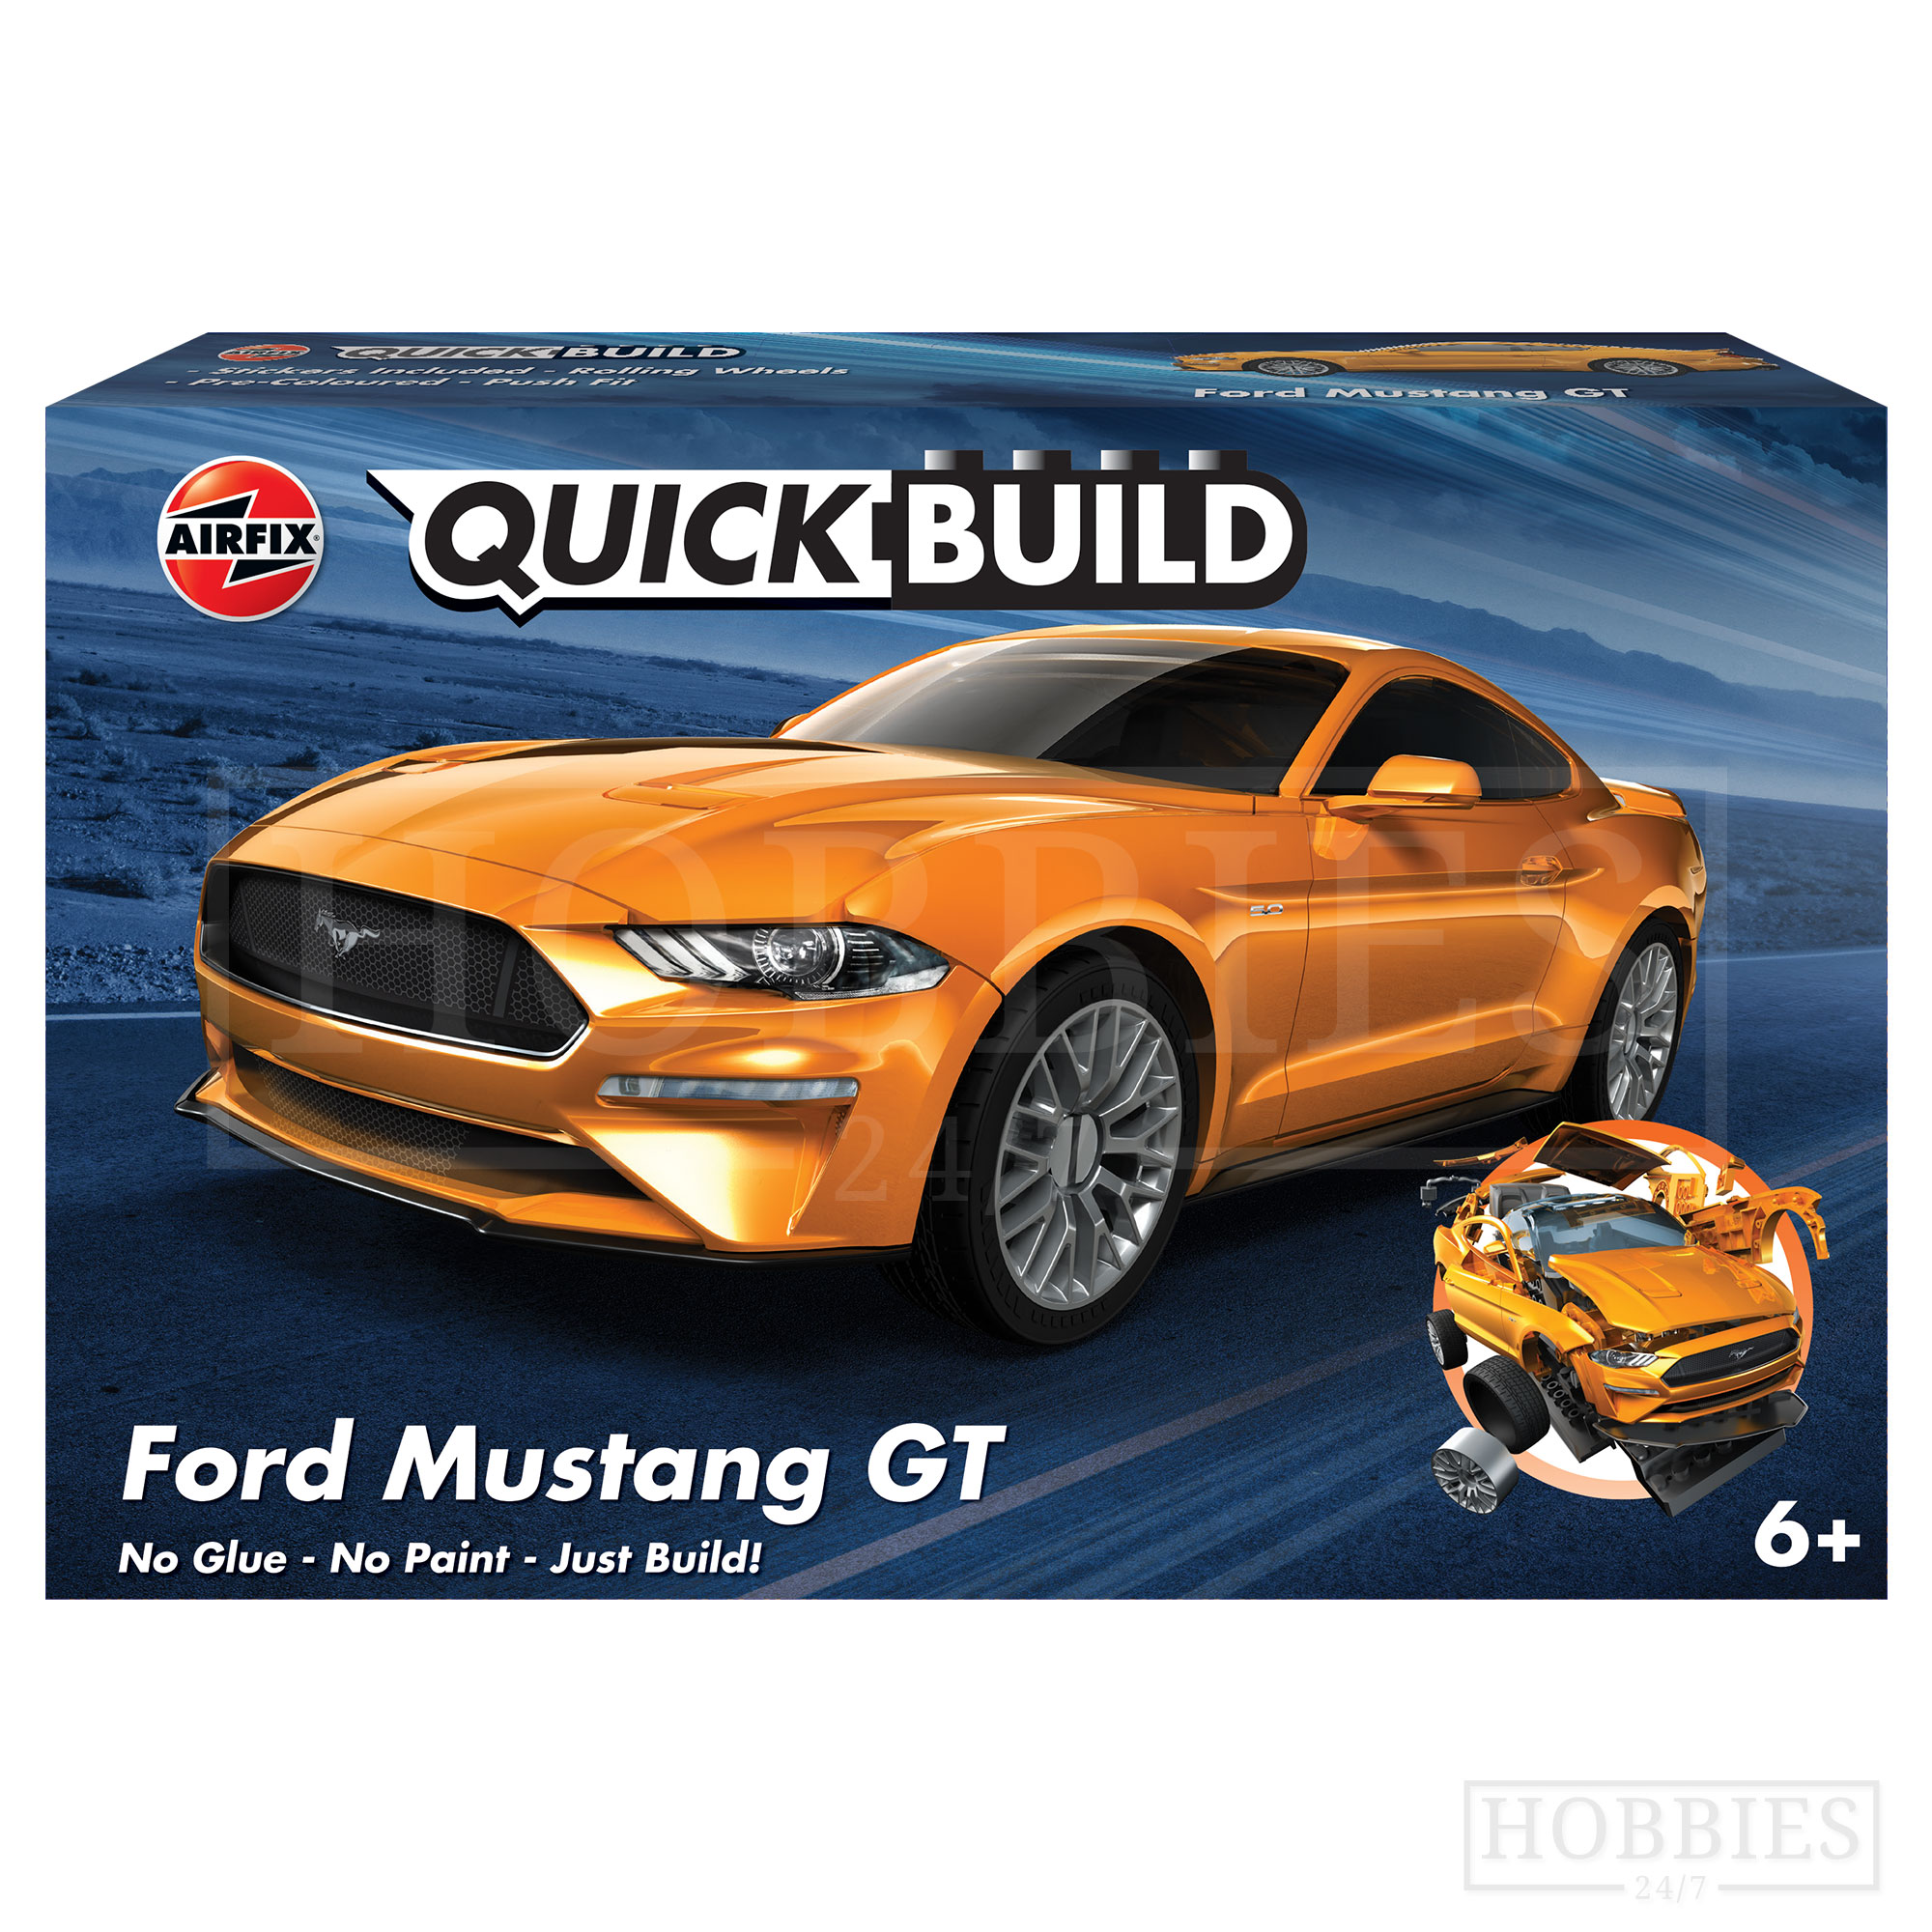 Airfix Ford Mustang GT Quickbuild - Hobbies247 Online Model Shop